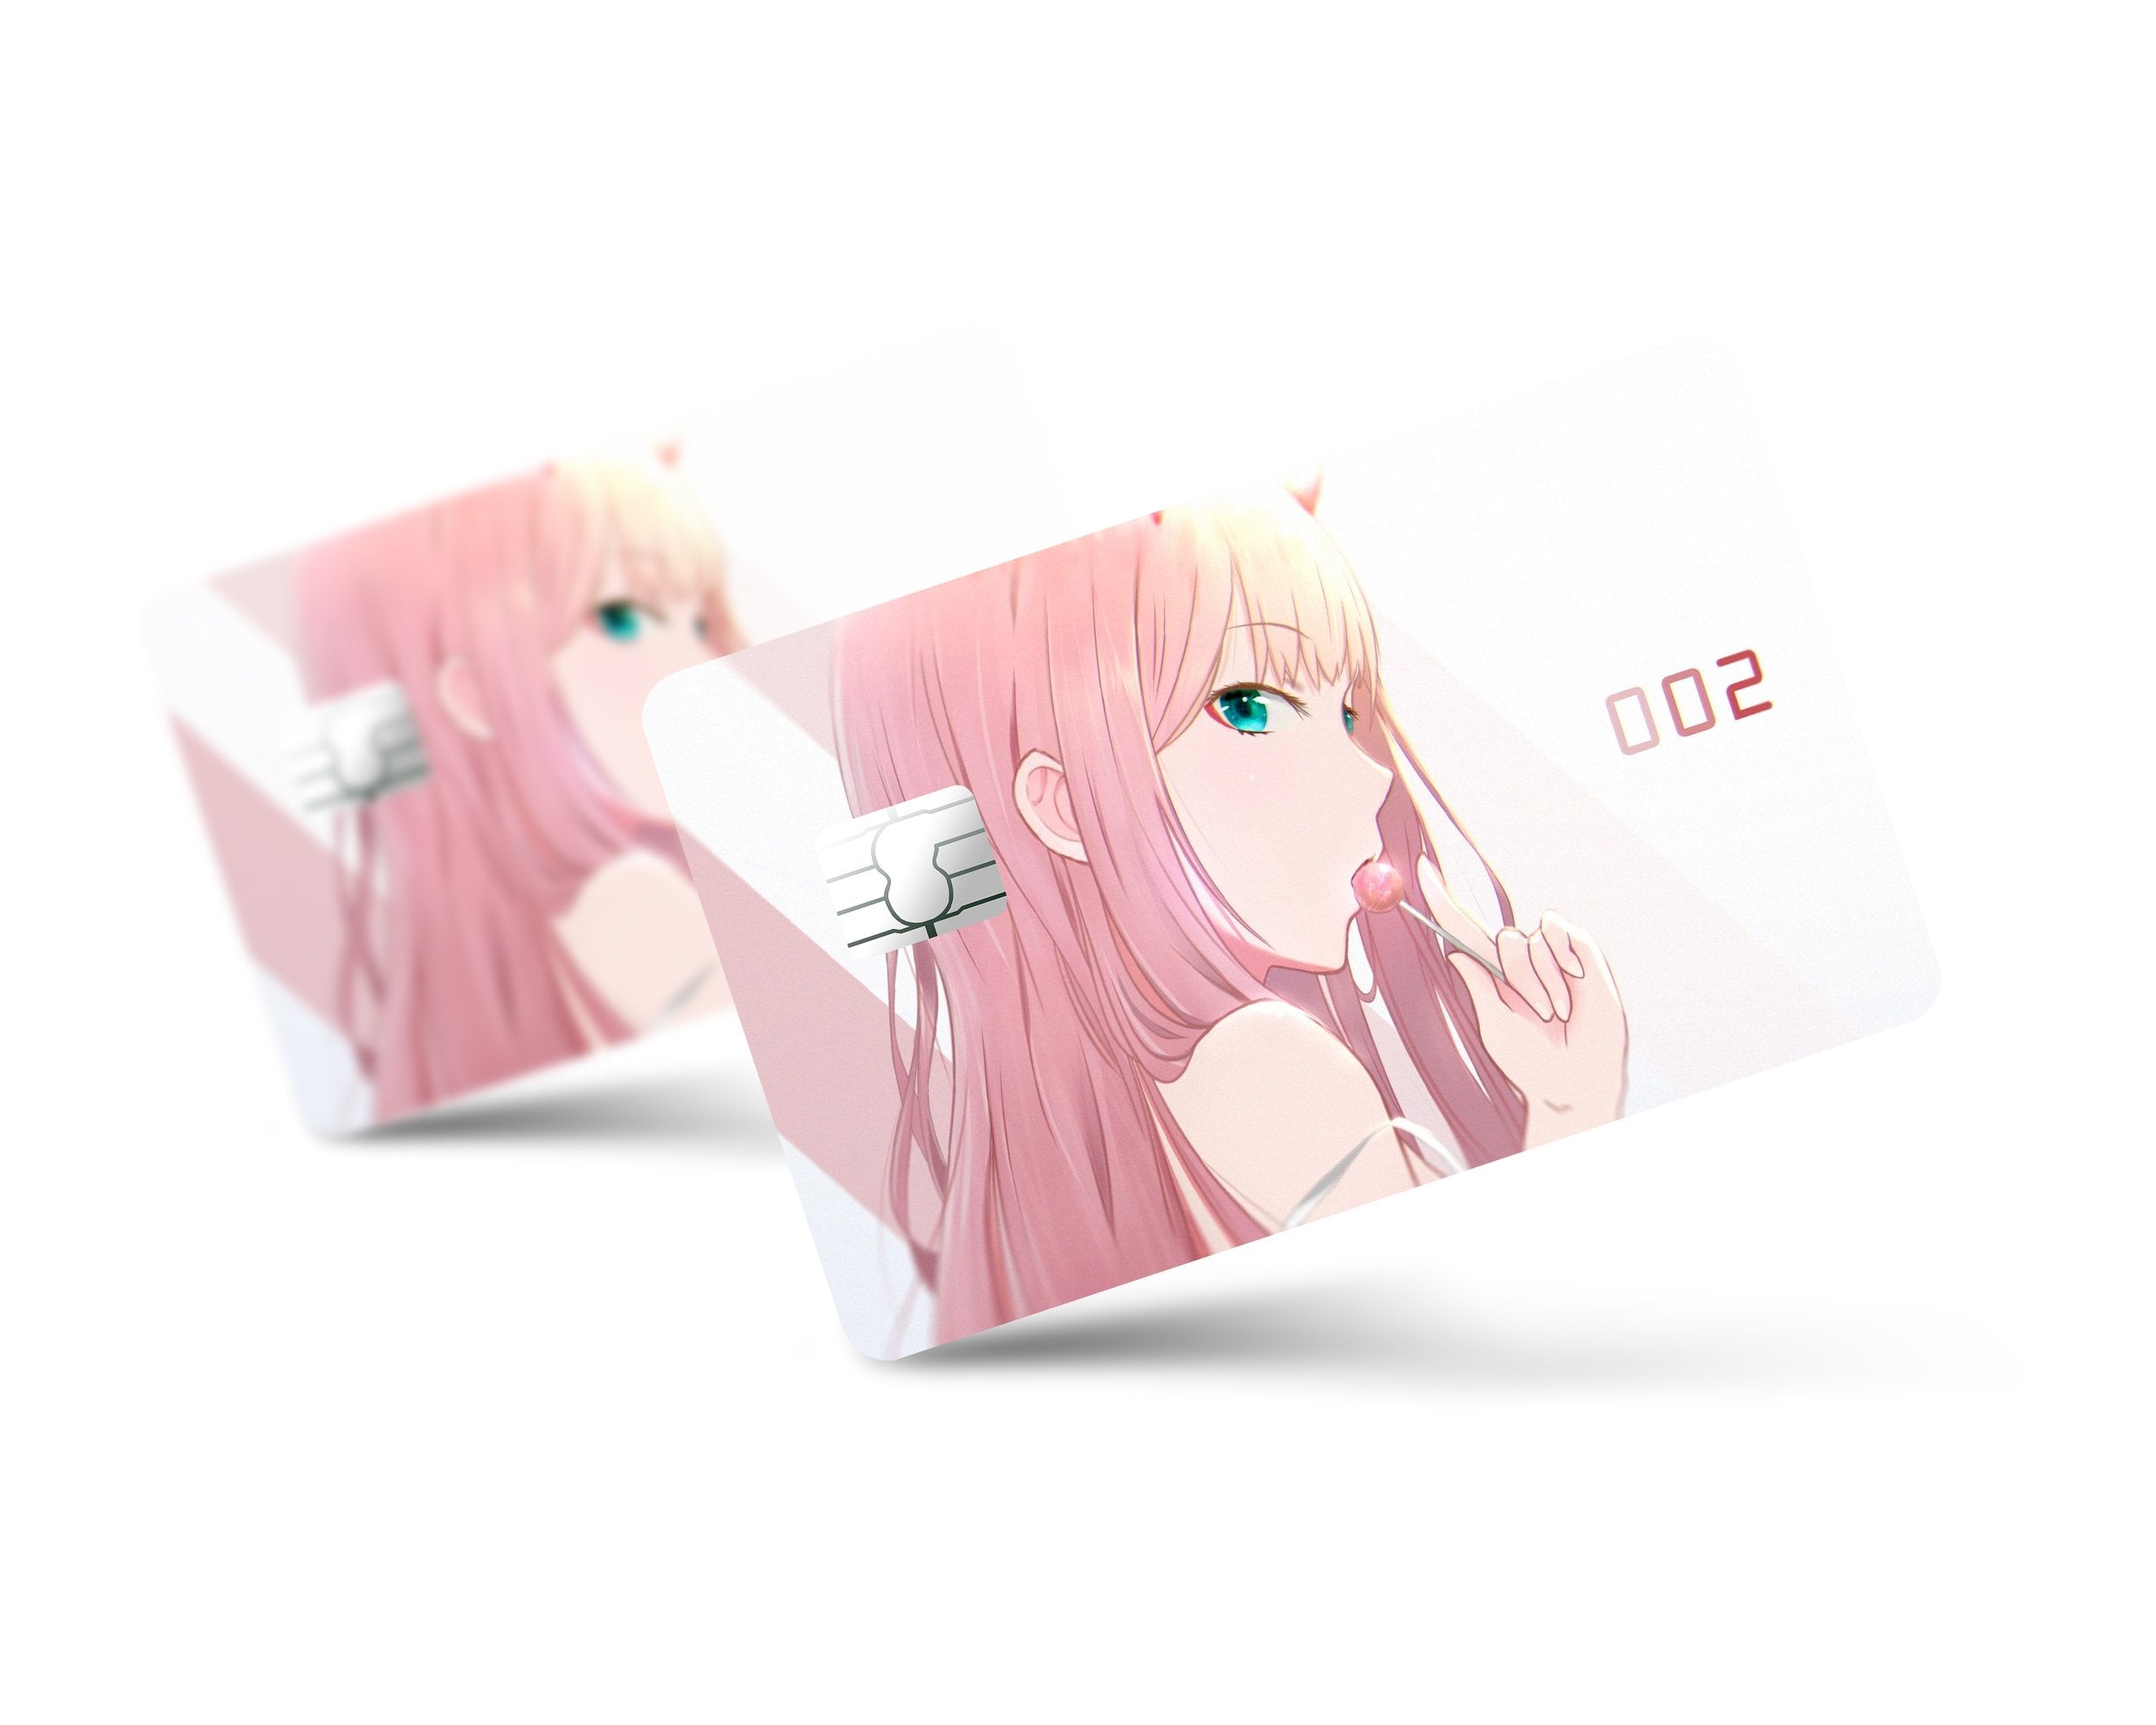 WORKIRAN Anime Card Skin | Sticker for Transportation, Debit Card, Credit  Card Skin | Covering & Per…See more WORKIRAN Anime Card Skin | Sticker for